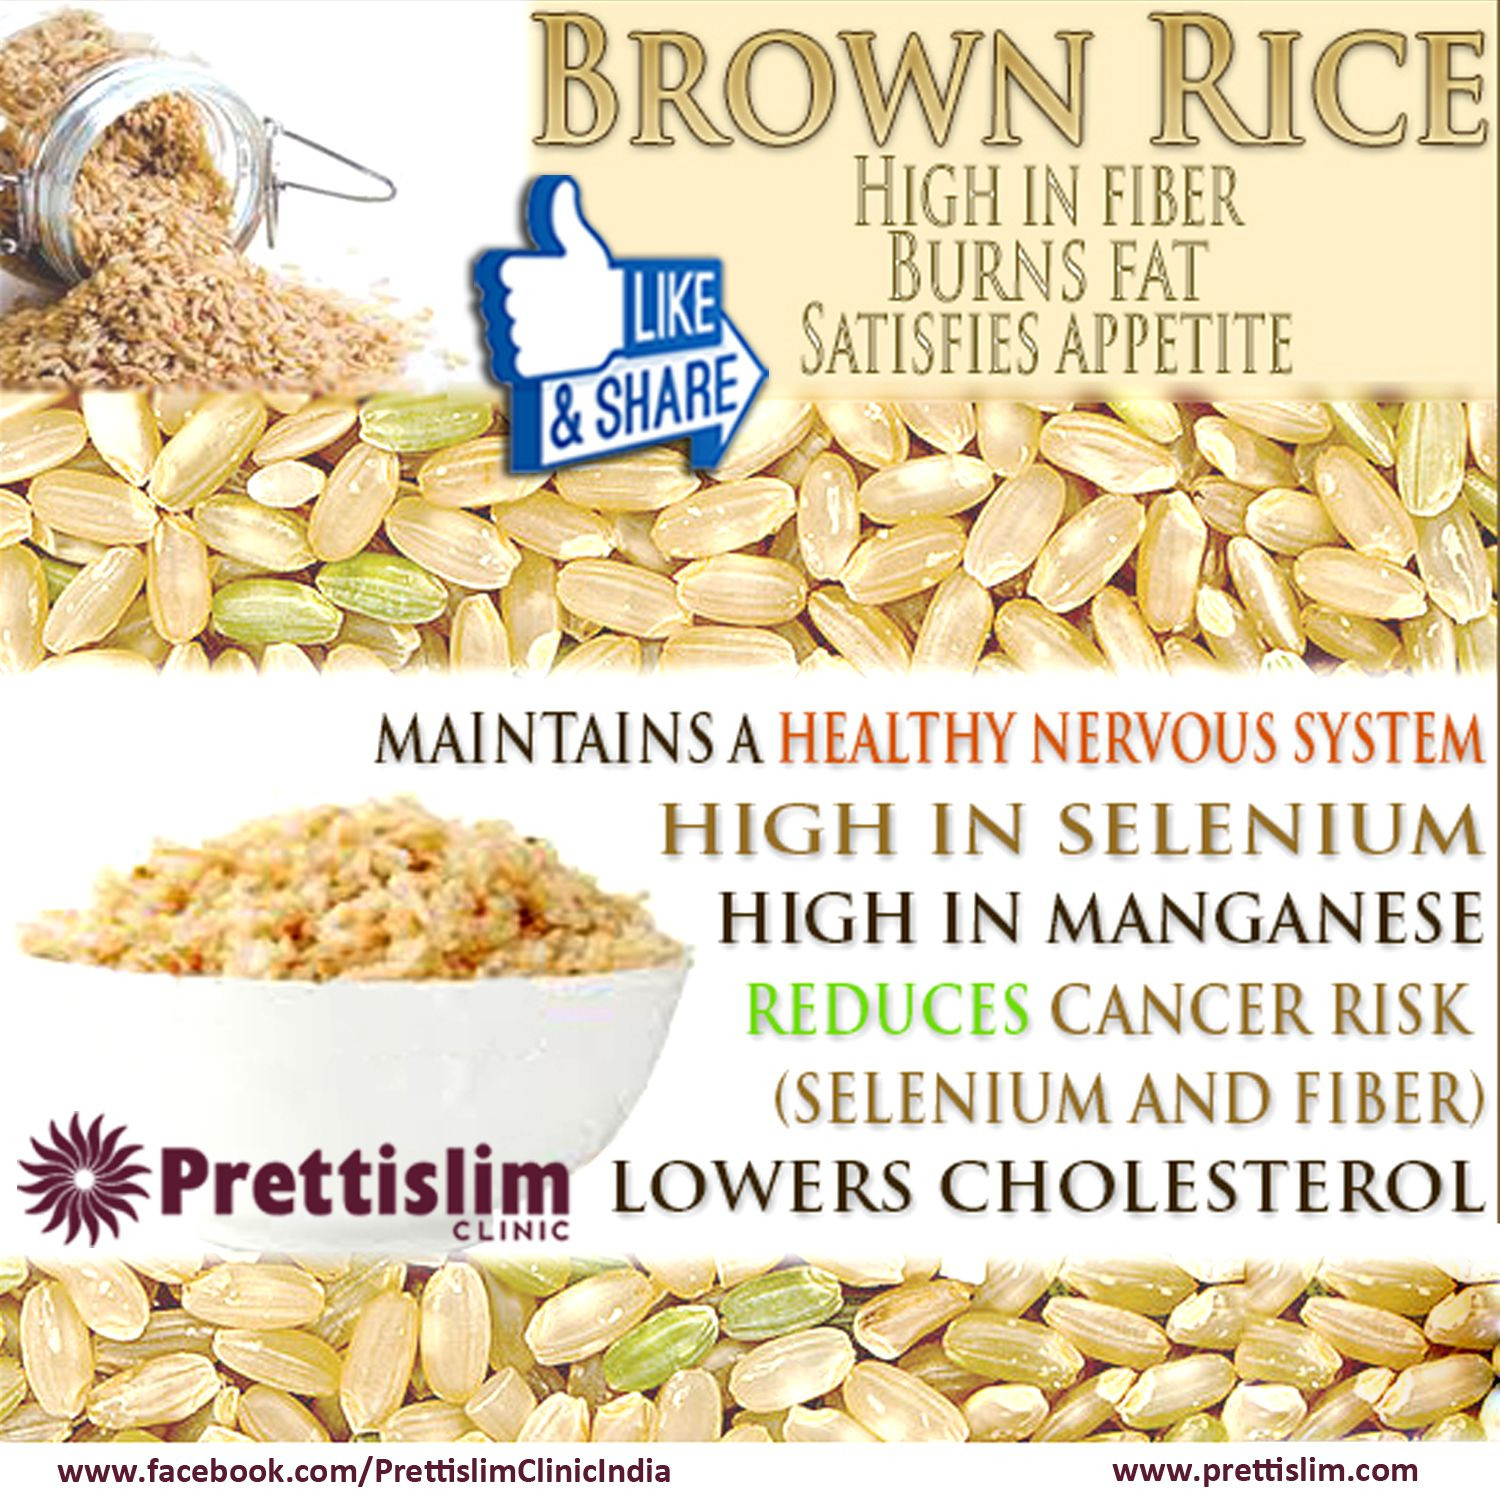 Brown Rice Dietary Fiber
 Brownrice High in Fiber BurnsFat Satisfies Appetite